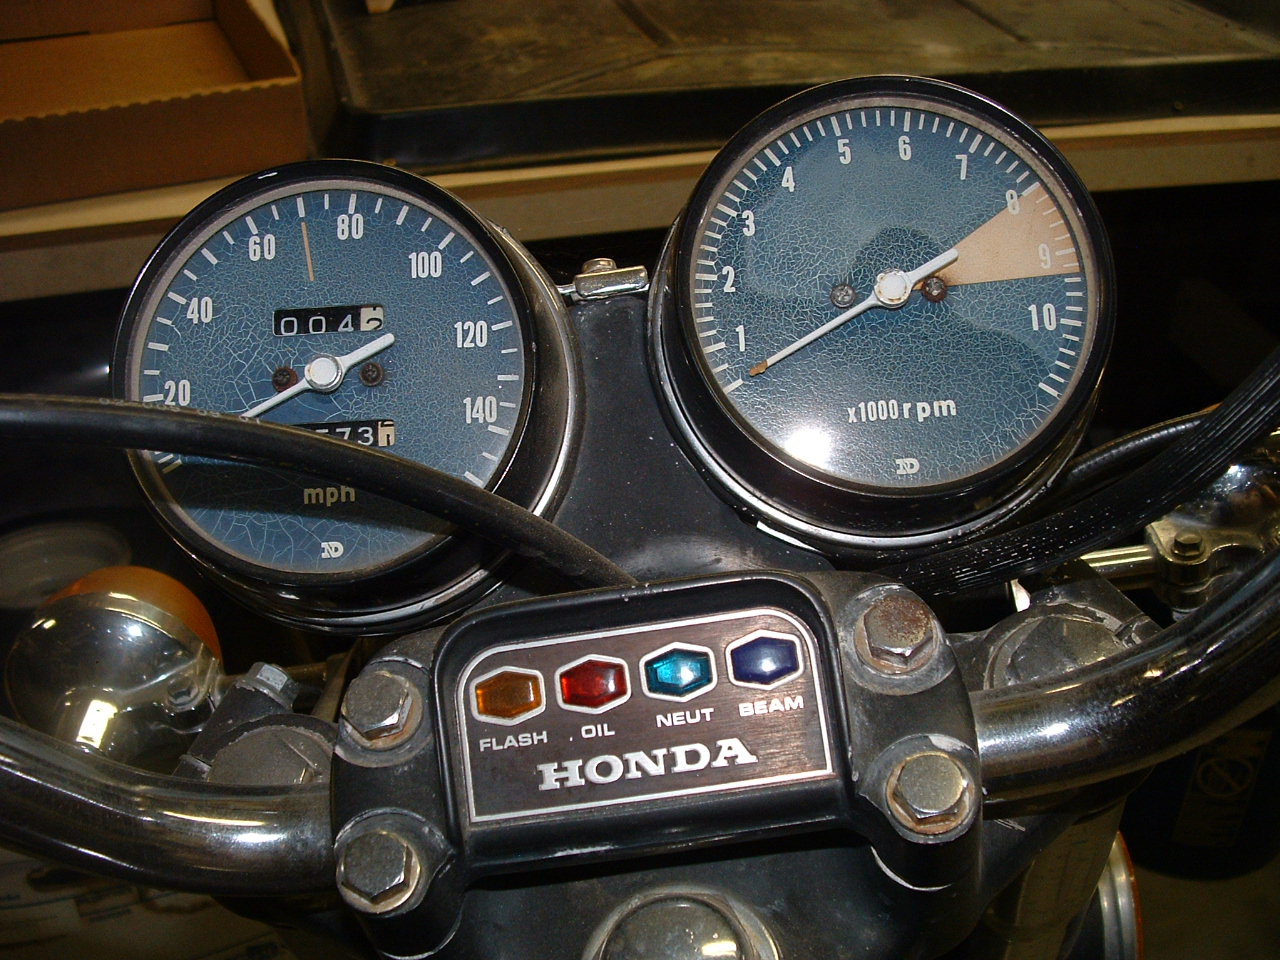 1972 Honda CB750 K2 Four by rcycle.com